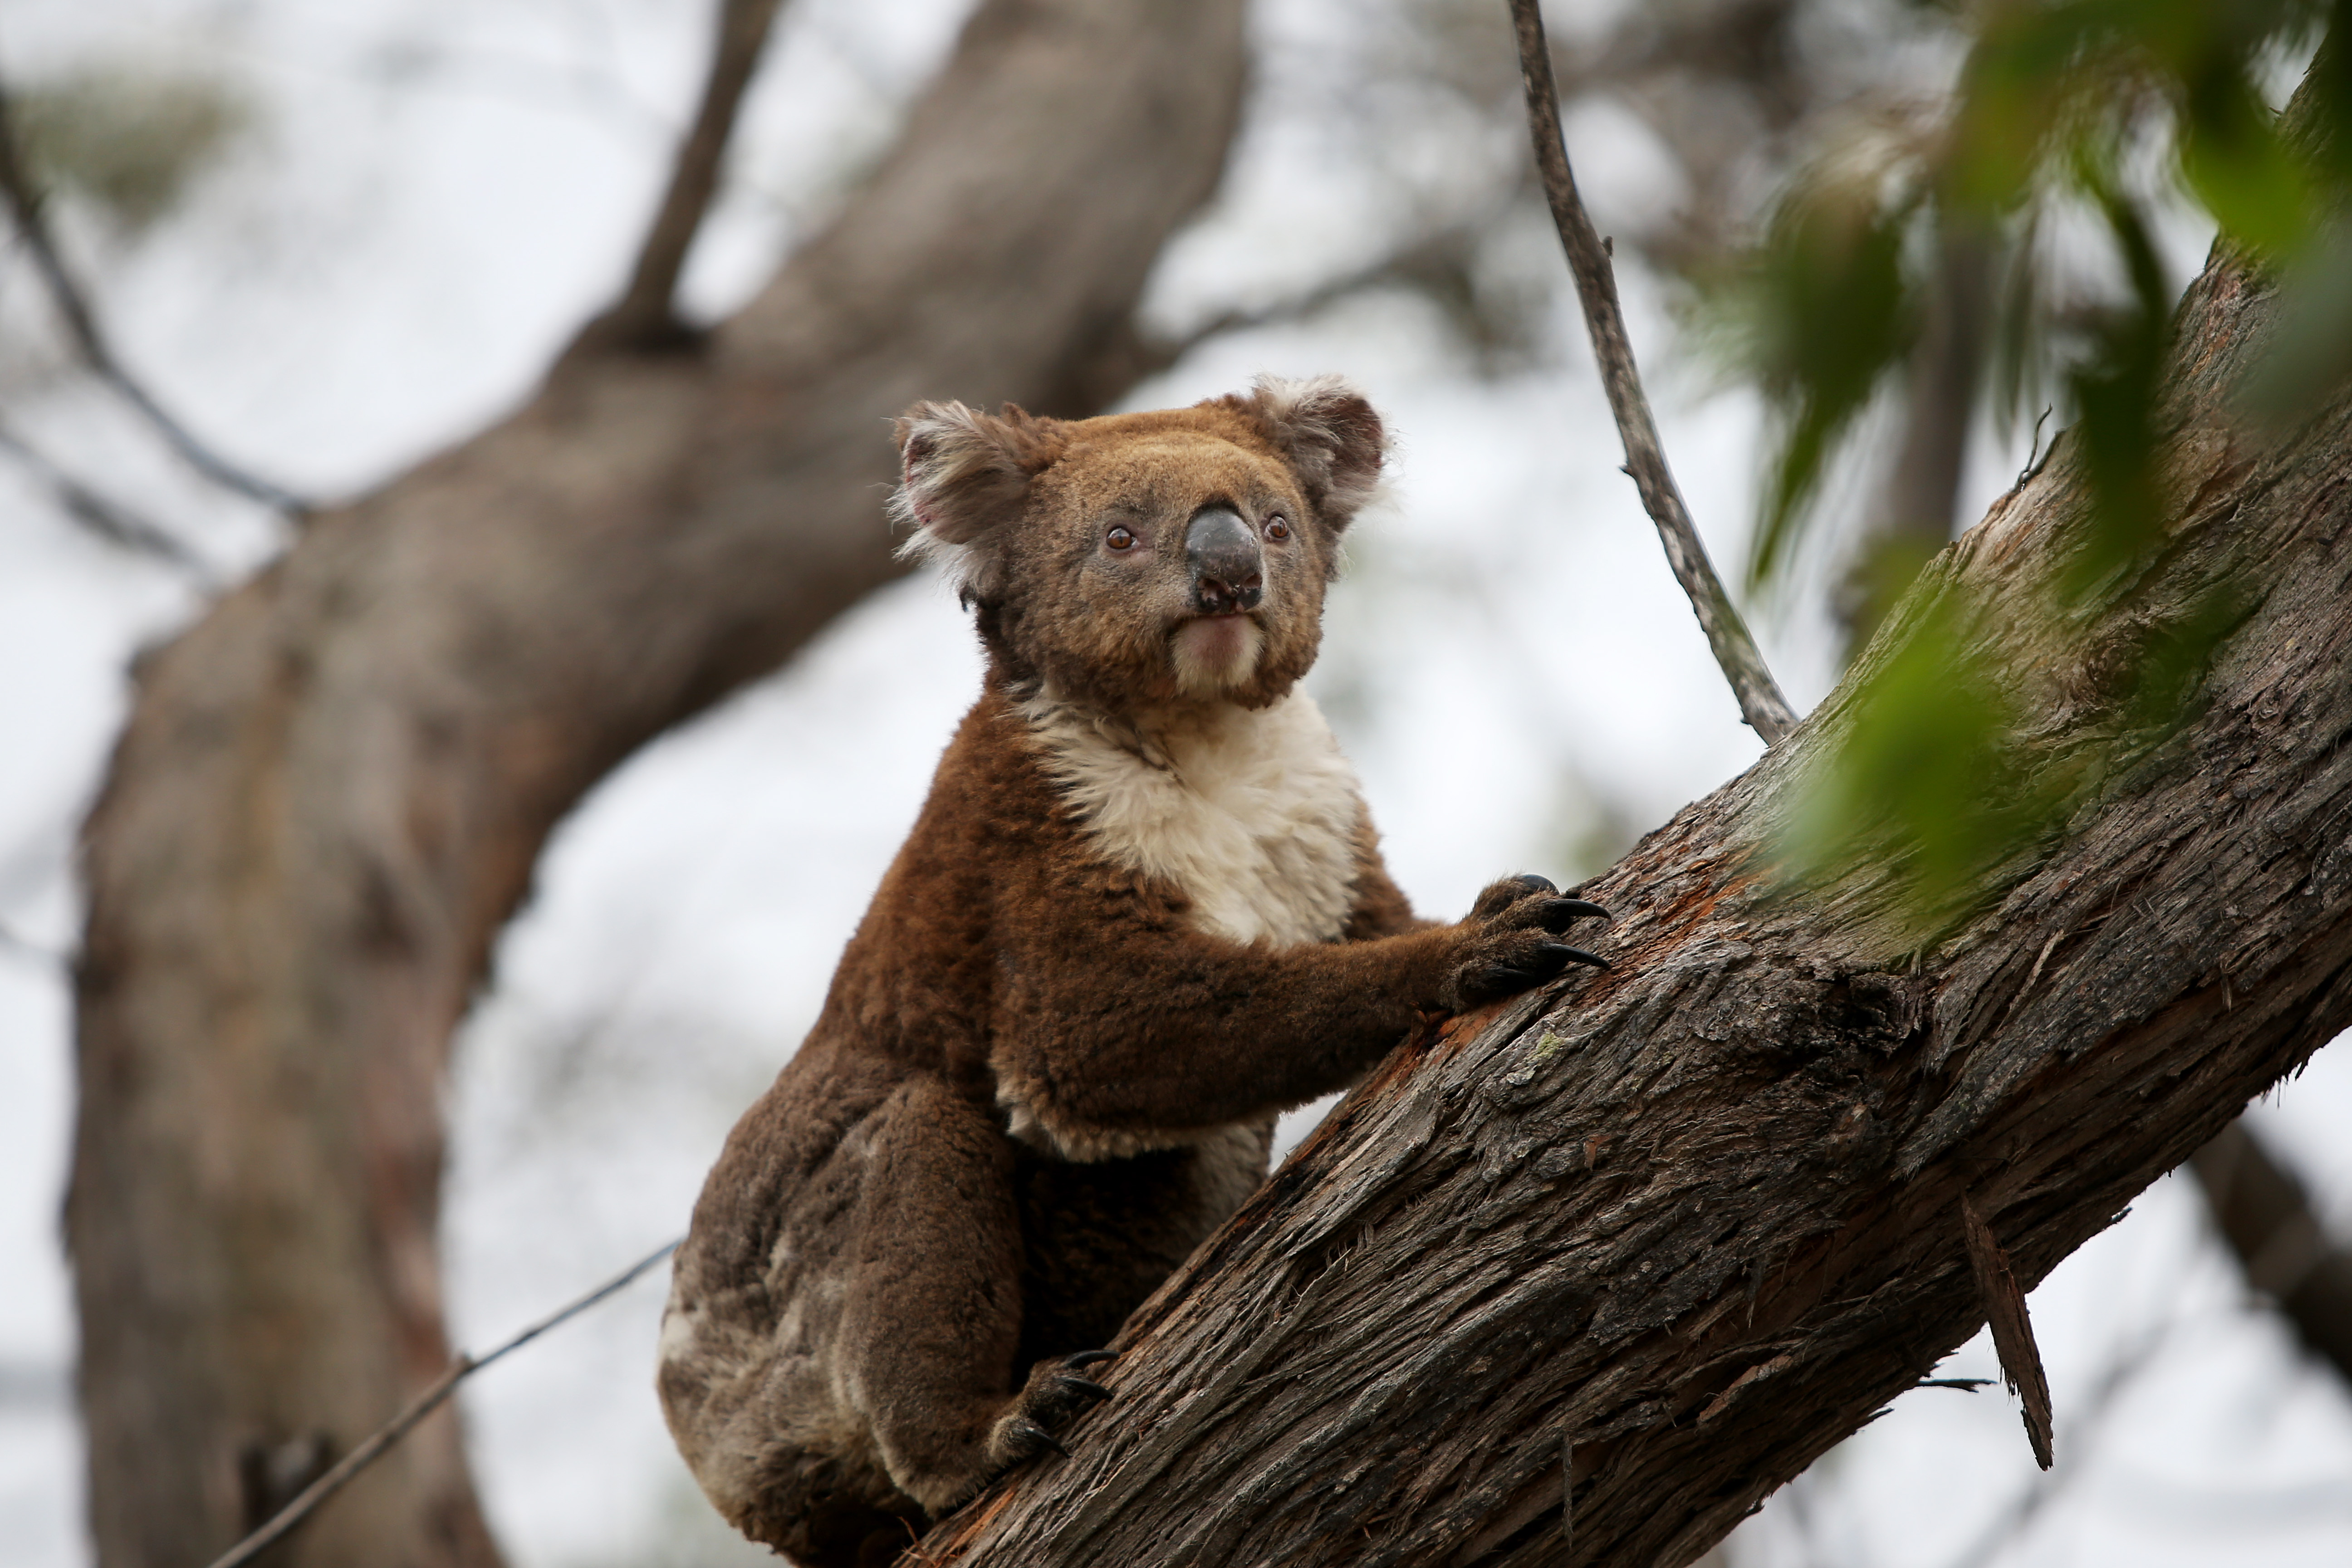 Bushfires Koala Deaths A Catastrophe But Extinction A Long Way Off Say Wildlife Experts